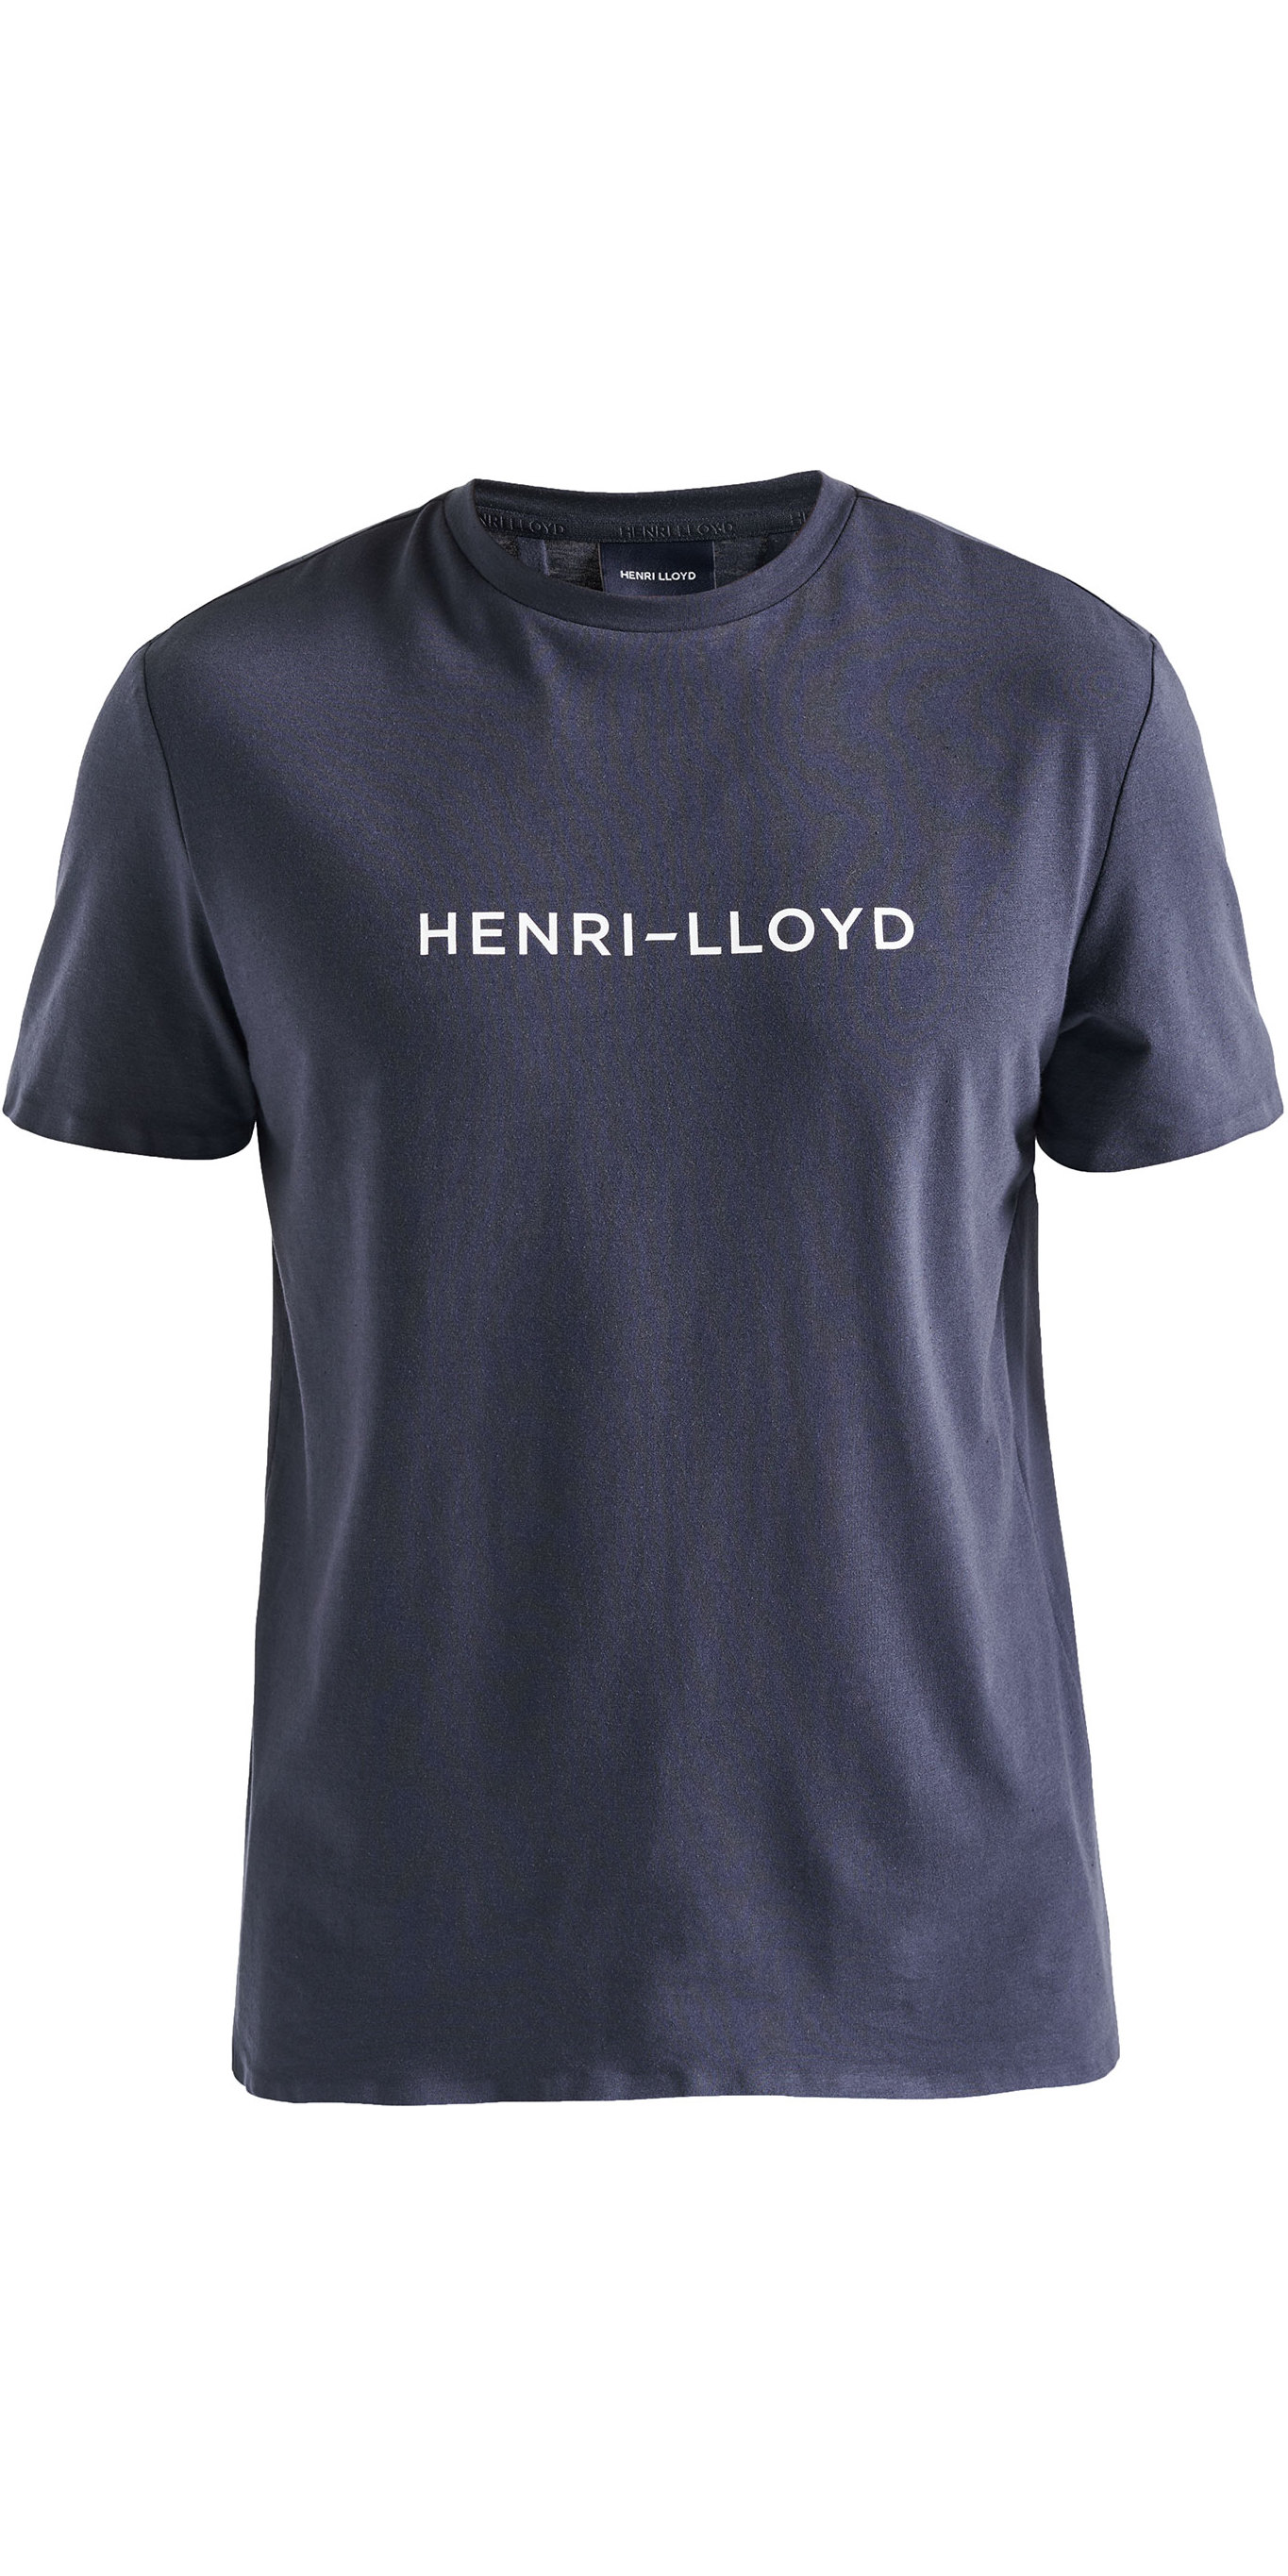 2020 Henri Lloyd Mens Fremantle Stripe Tee Navy Blue P191104009 - Sailing | Outlet